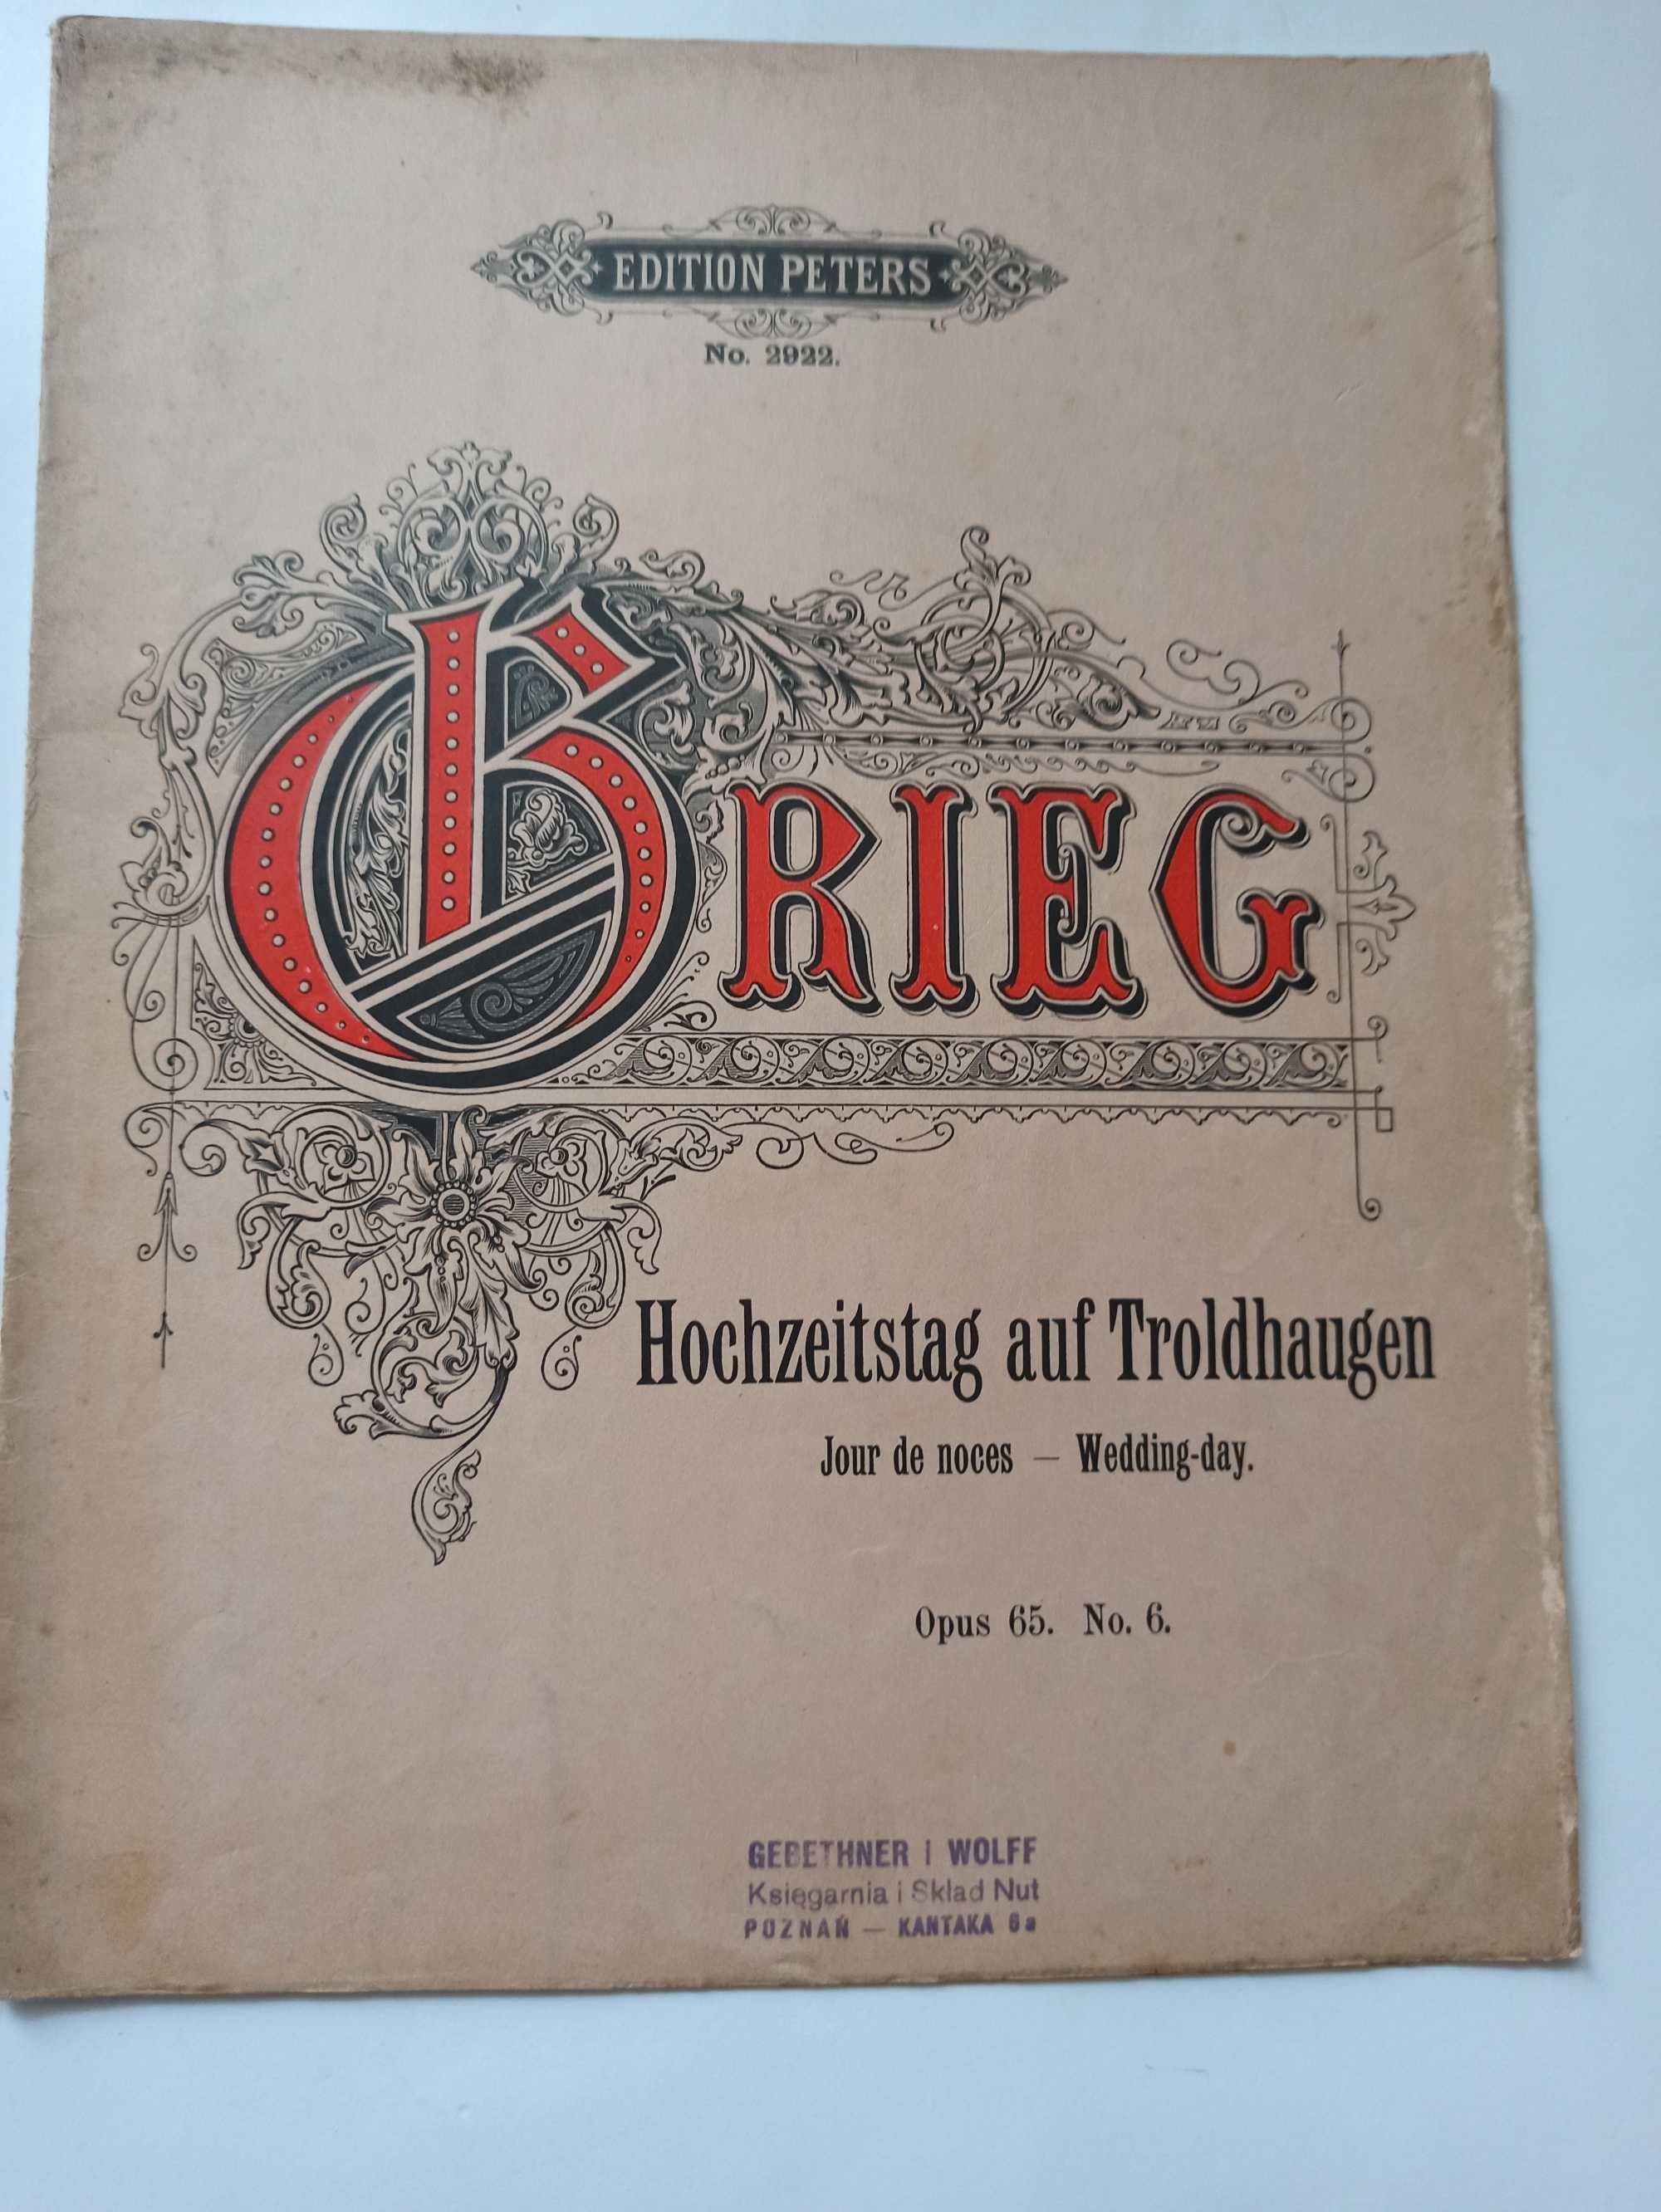 E. Grieg Wedding Day at Troldhaugen”